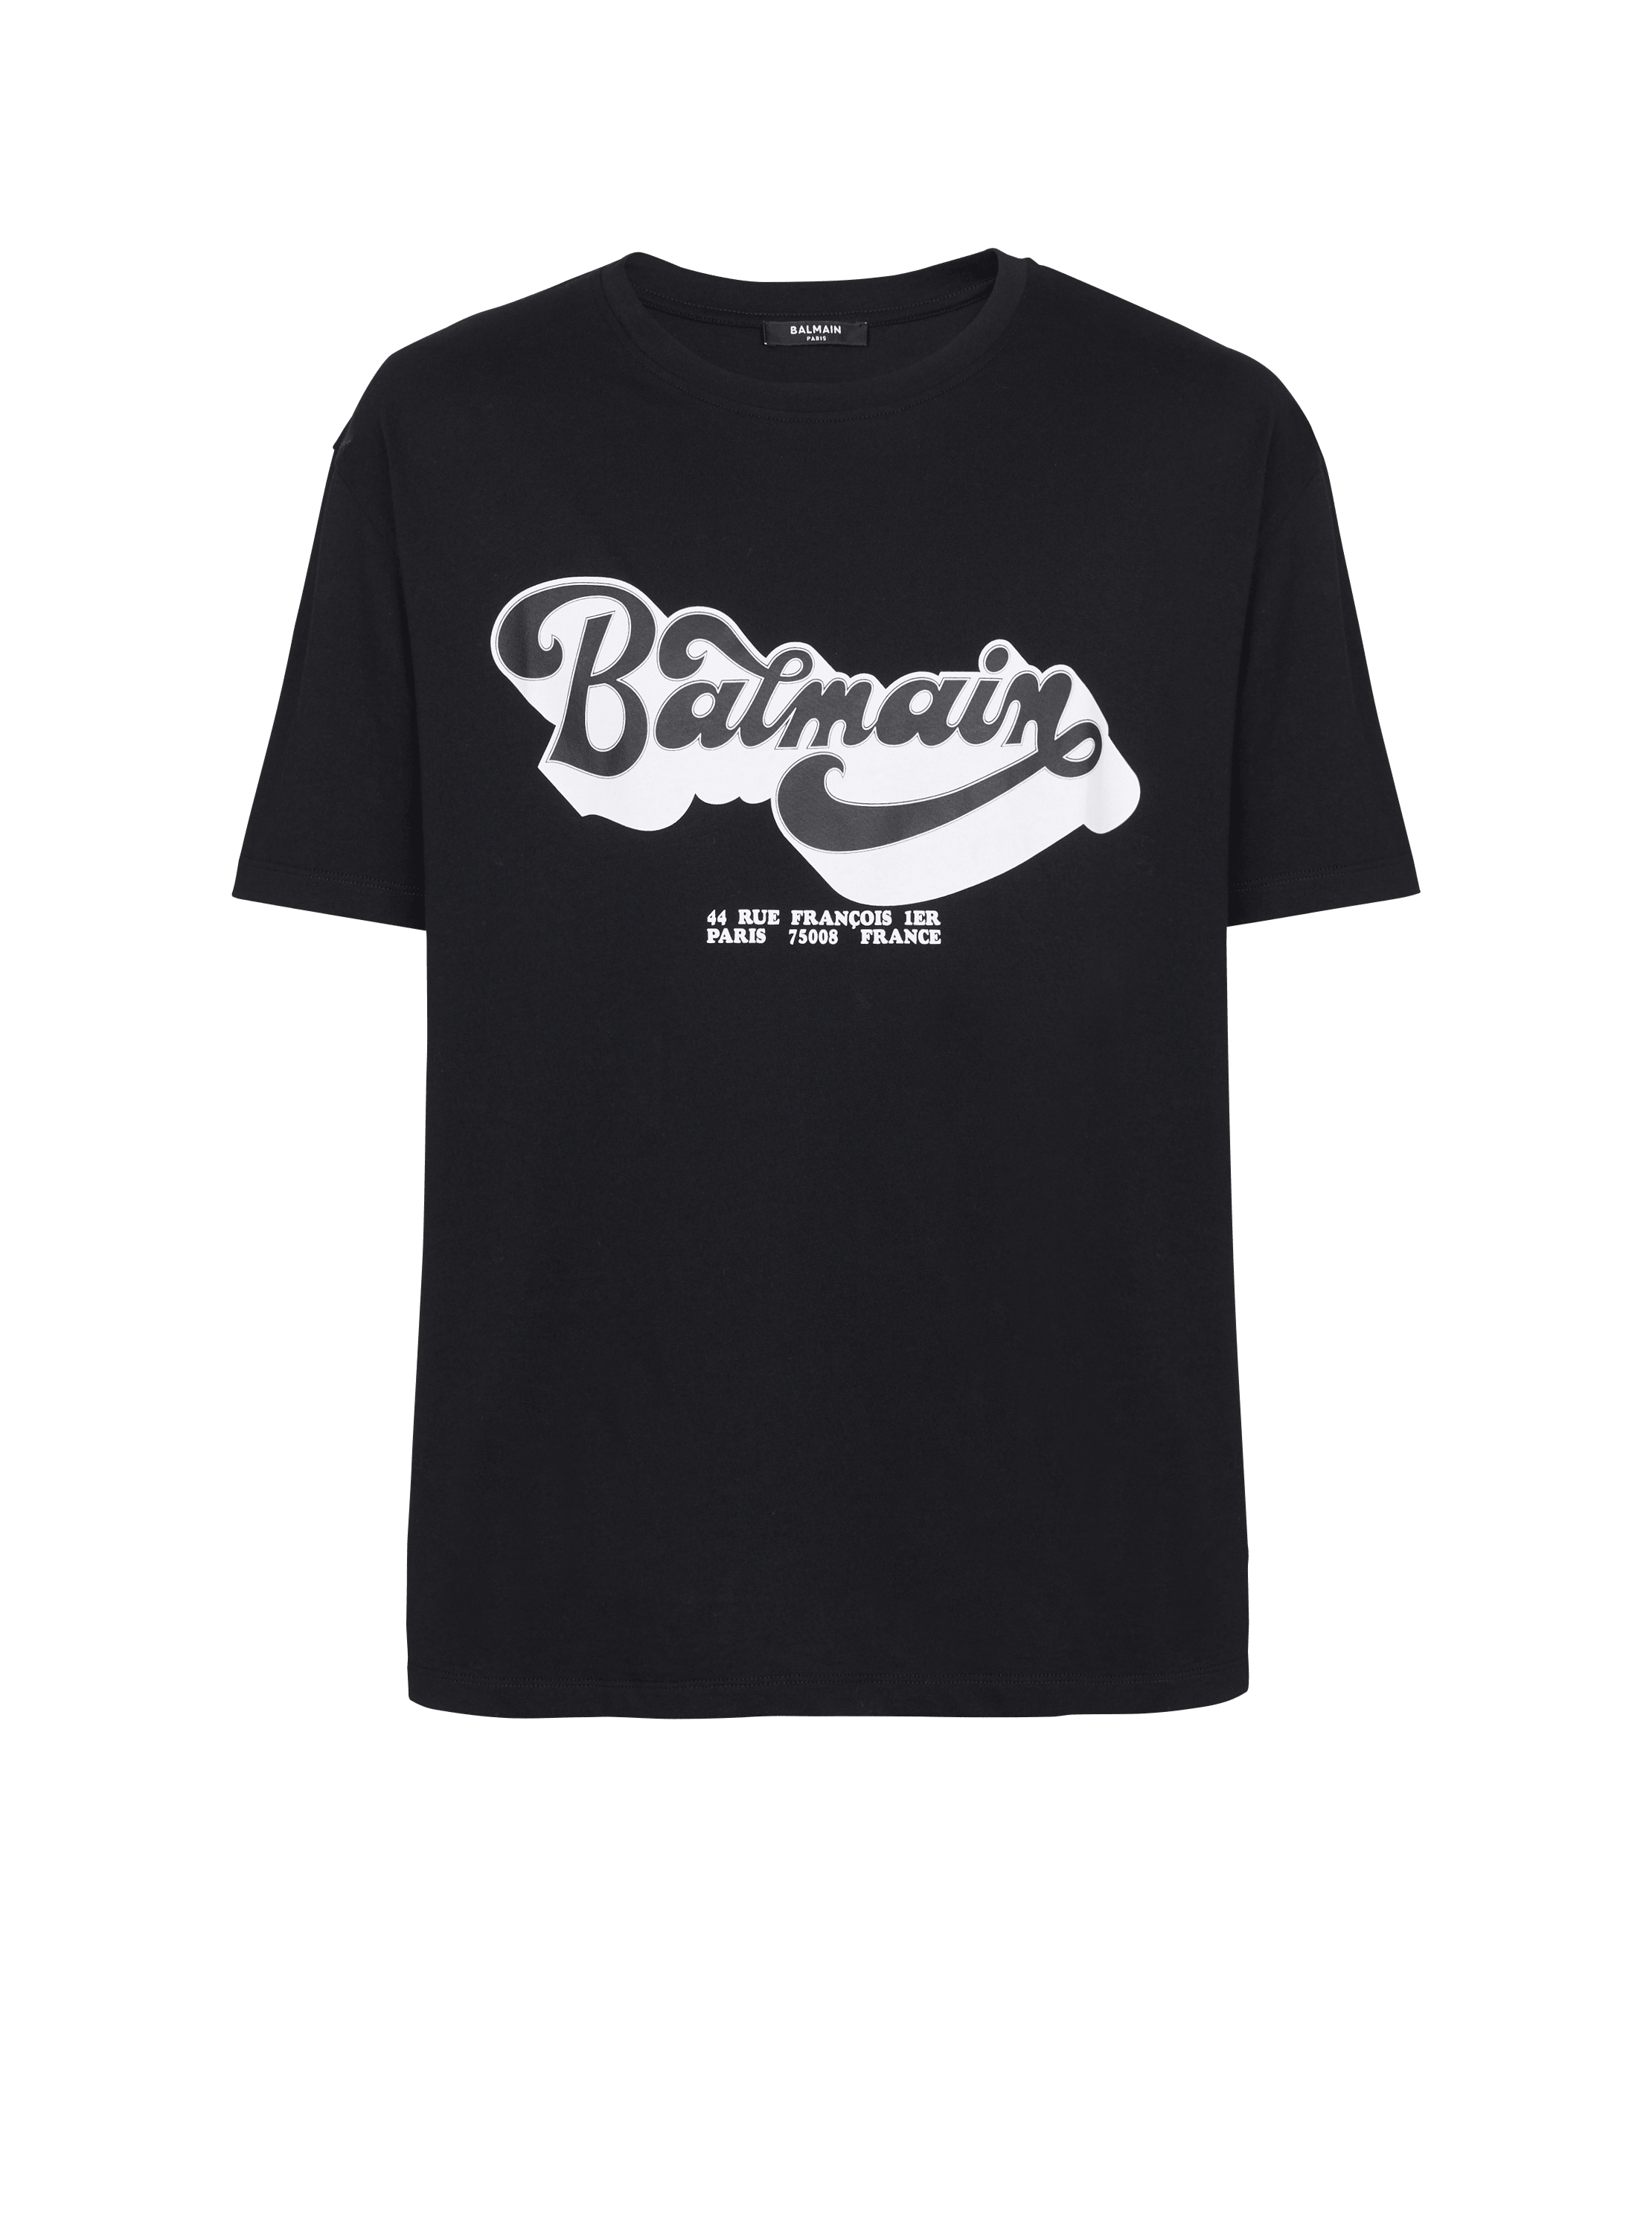 Balmain '70s Tシャツ